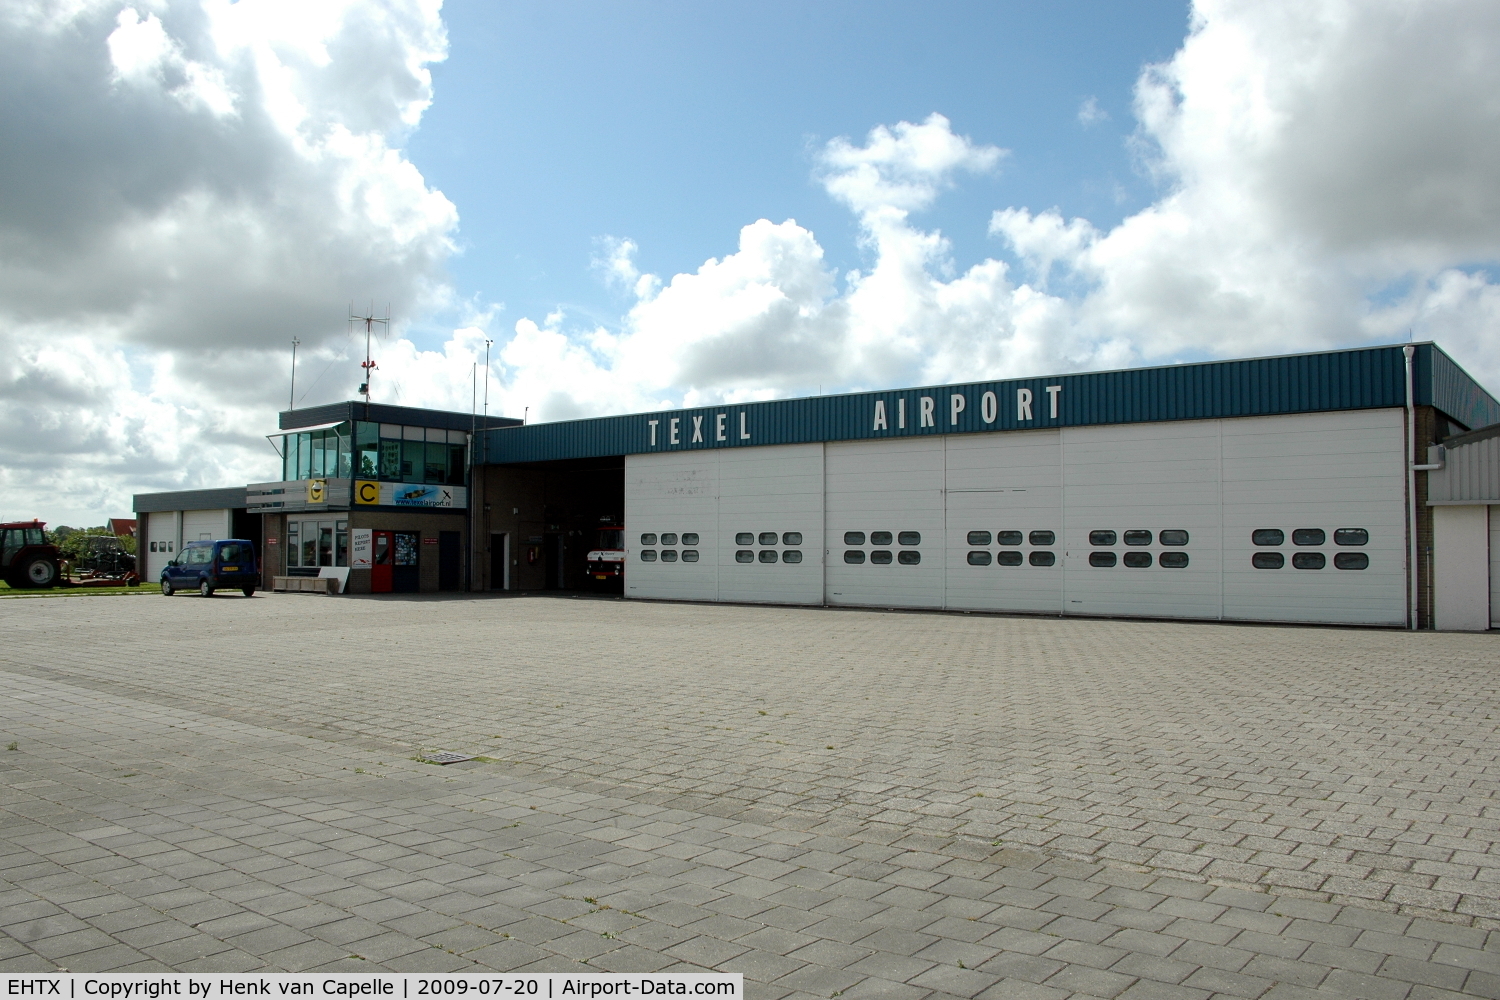 Texel International Airport, Texel Netherlands (EHTX) - Texel airport tower and hangar.